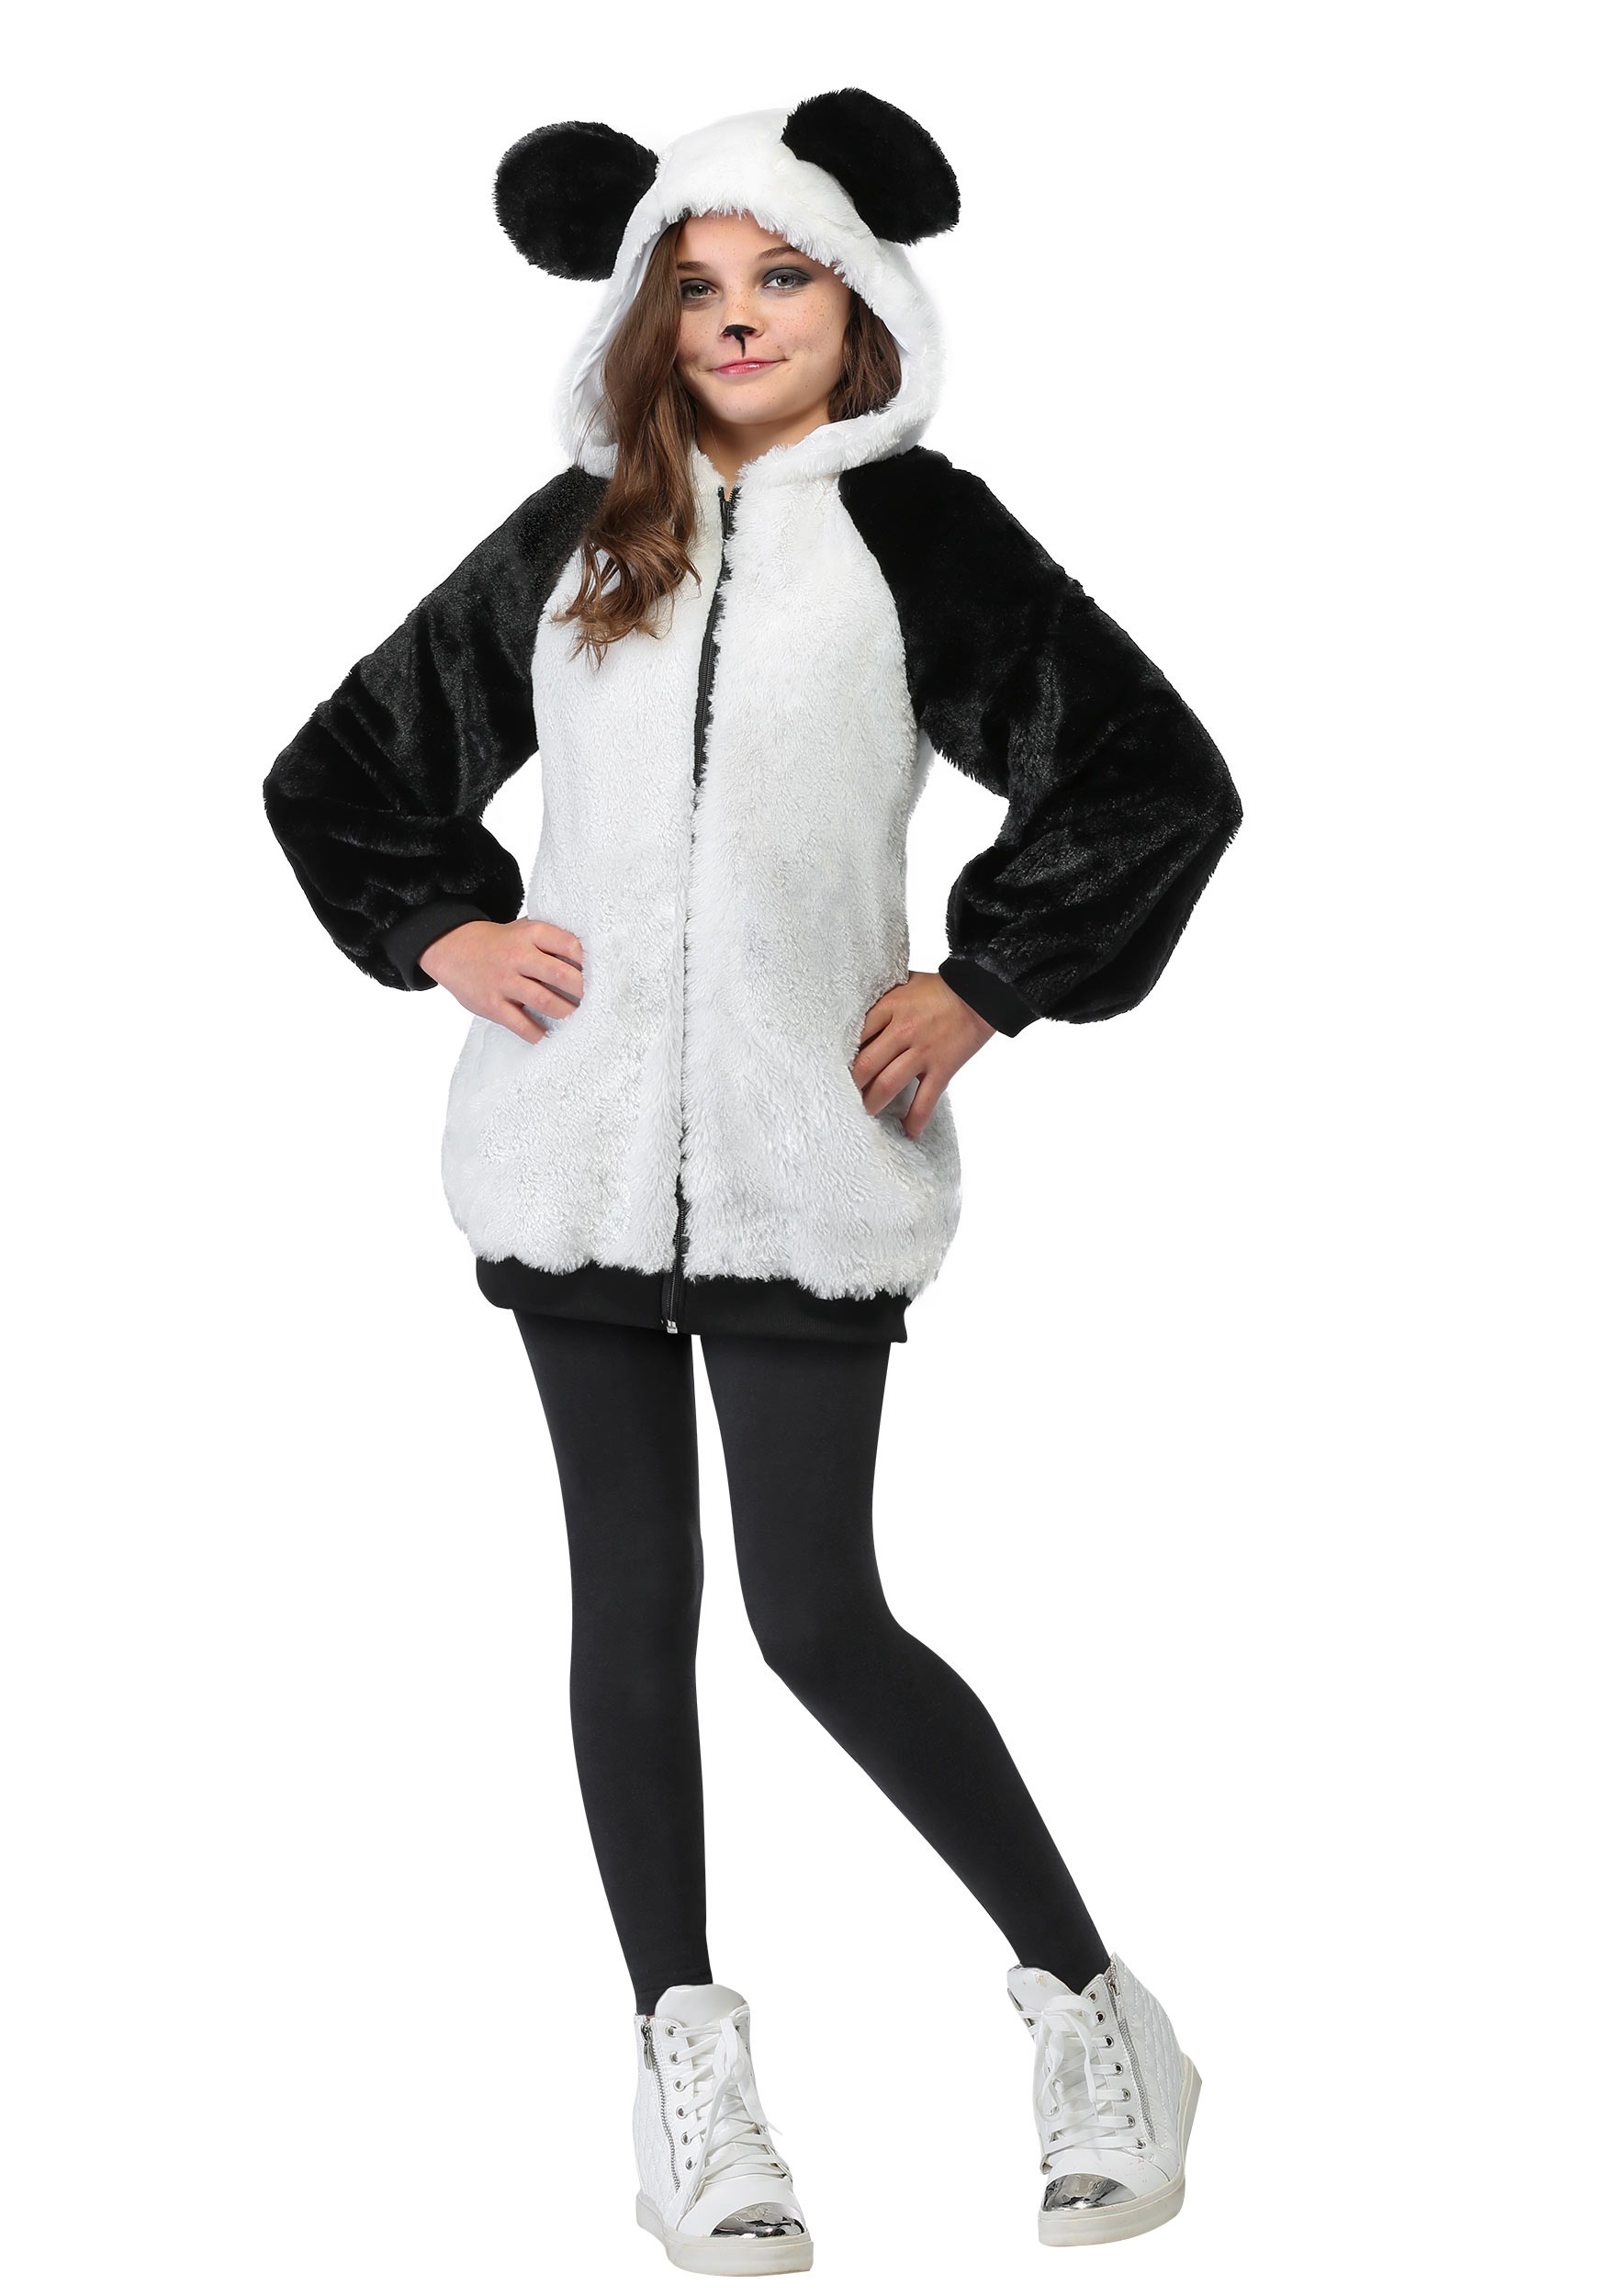 Photos - Fancy Dress Panda FUN Costumes  Hooded Jacket Costume for Girls Black/White 